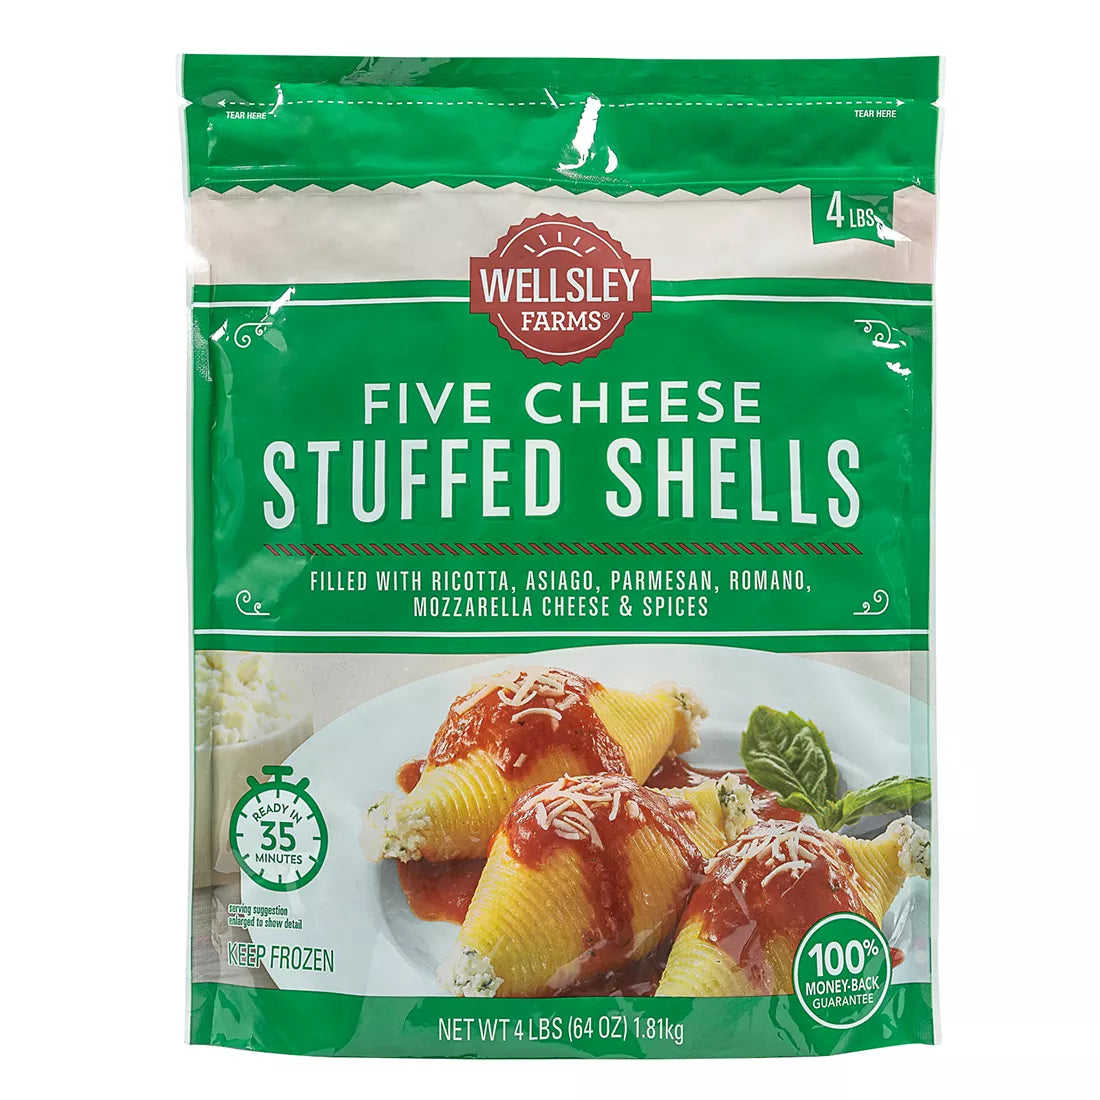 Wellsley Farms Five Cheese Stuffed Shells, 4 lbs